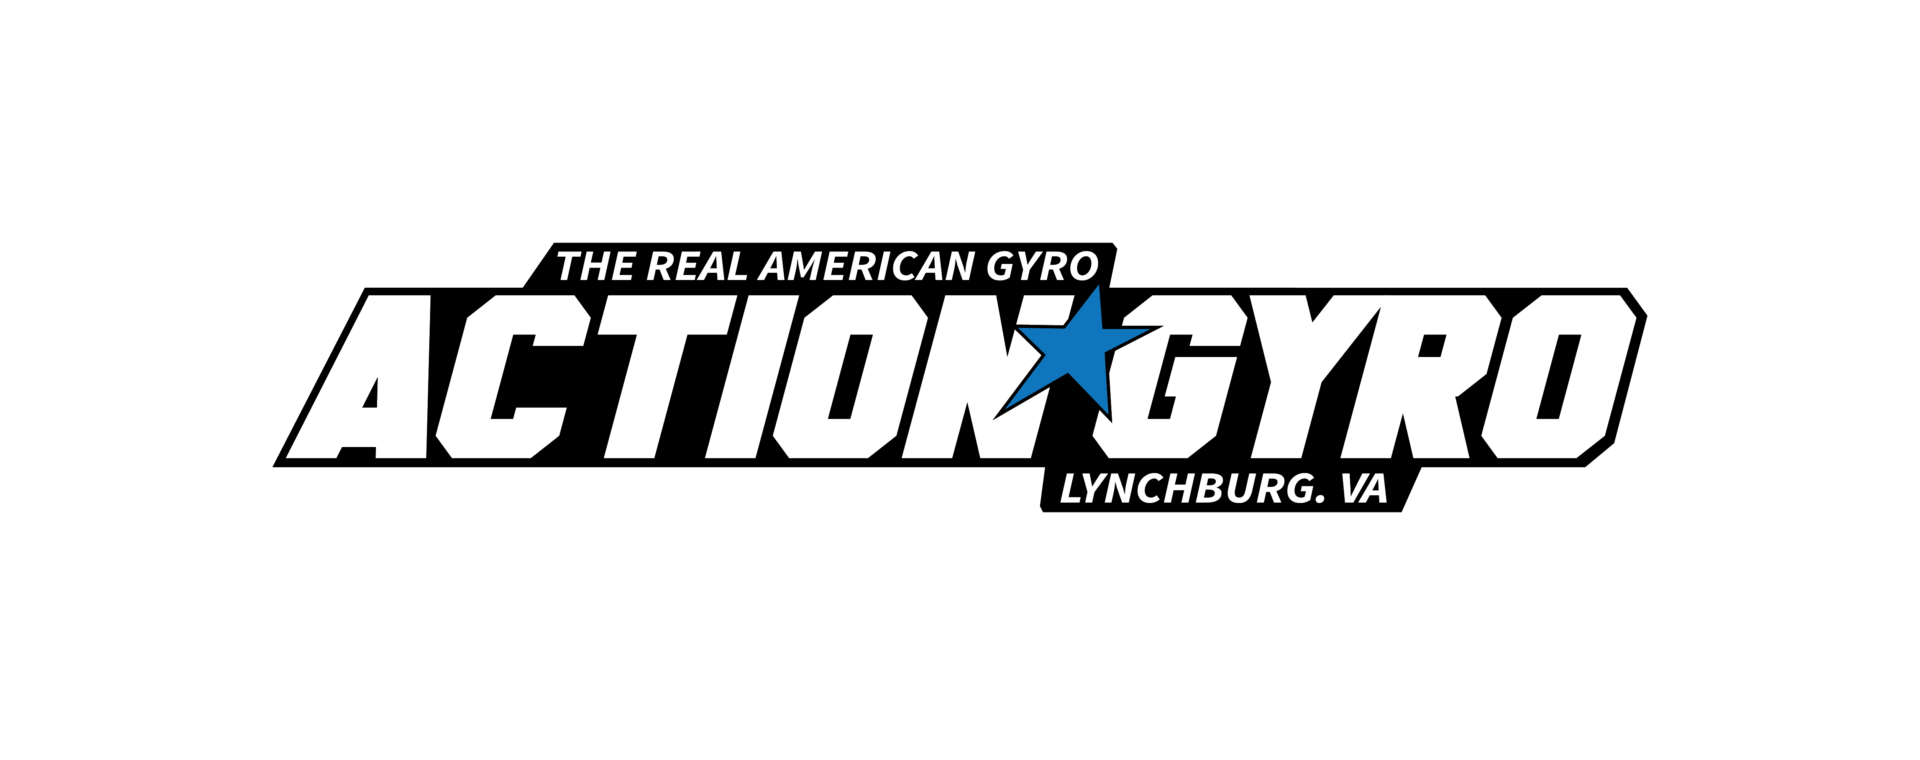 Gyro Logo - Action Gyro Logo Parks & Recreation